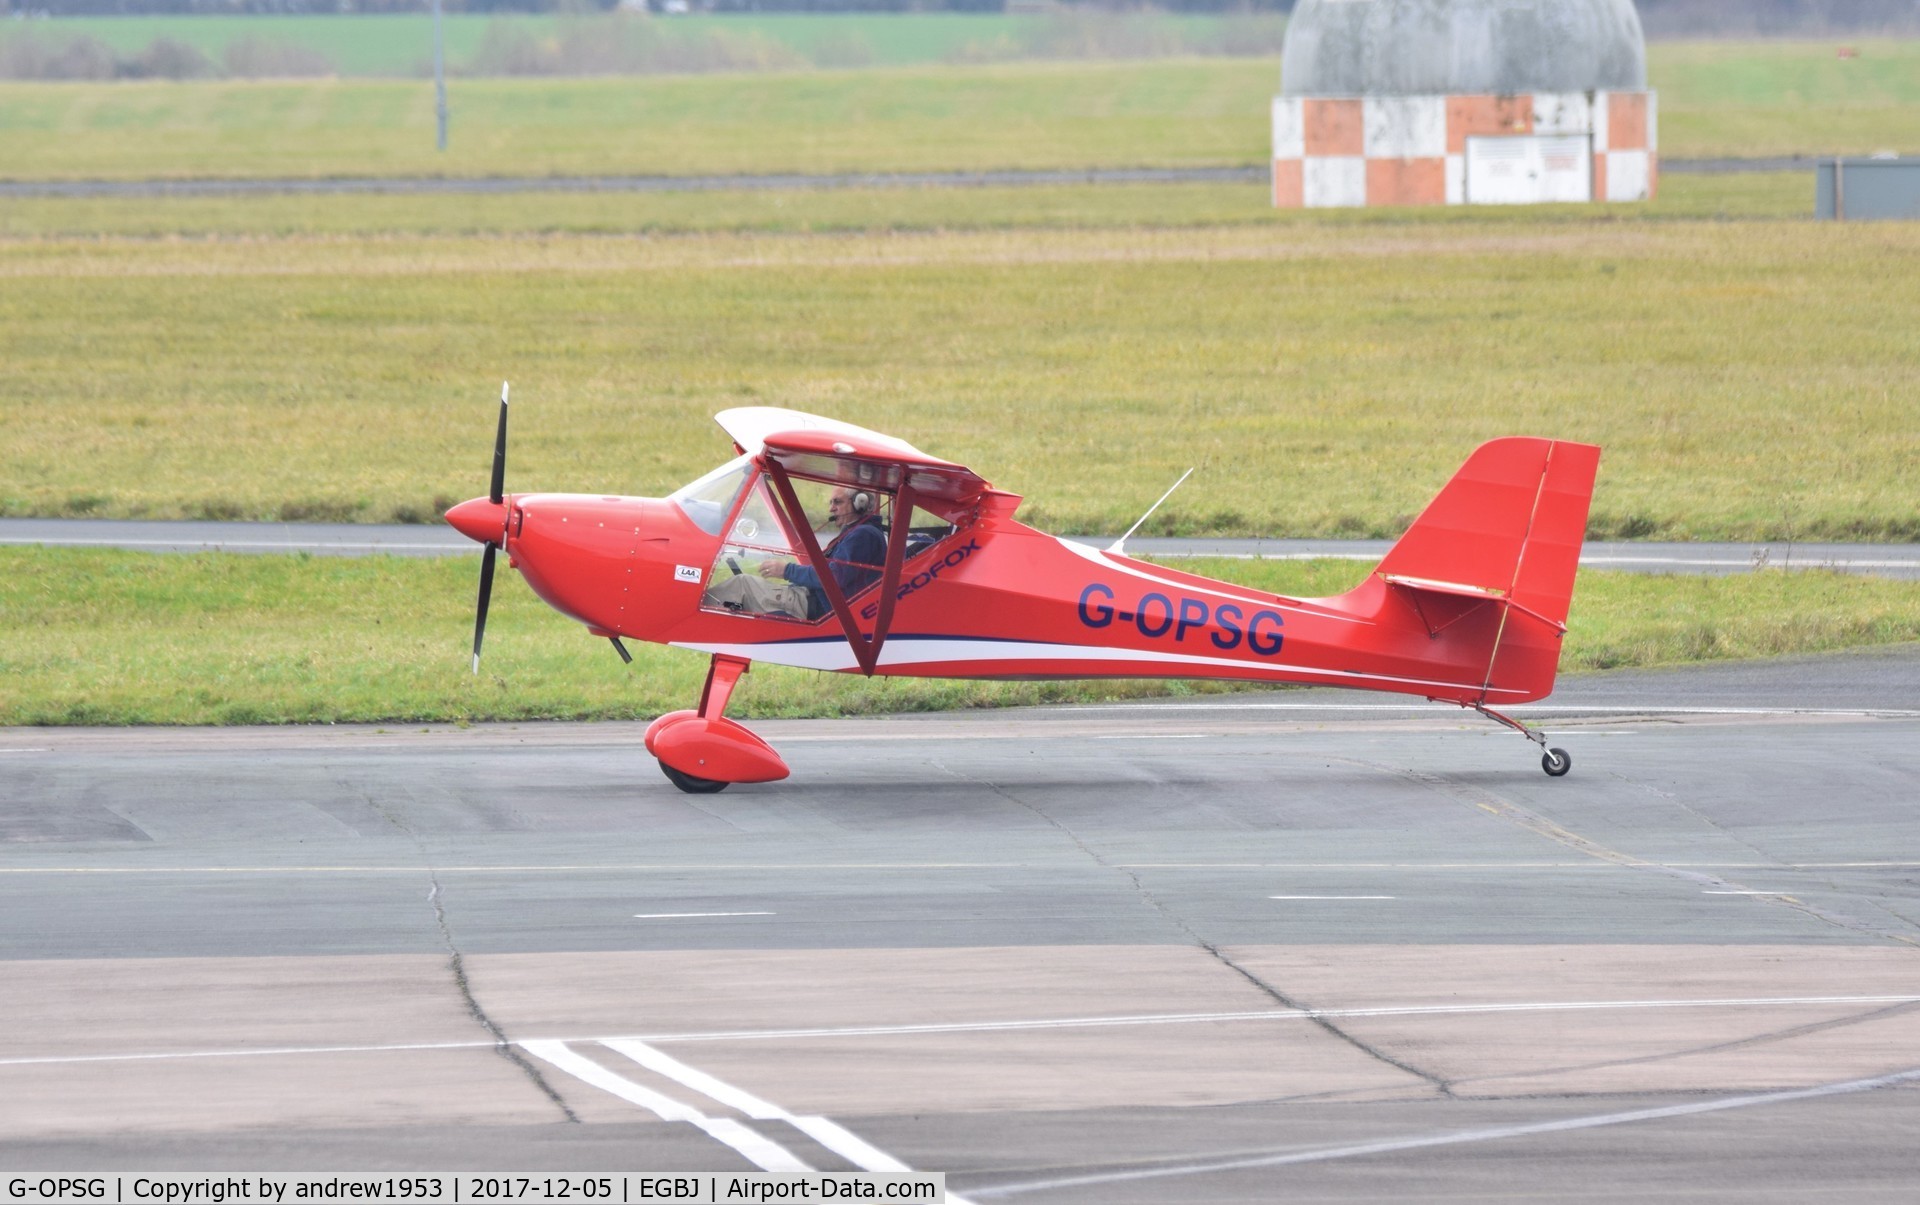 G-OPSG, 2013 Aeropro Eurofox 912(S) C/N LAA 376-15148, G-OPSG at Gloucestershire Airport.